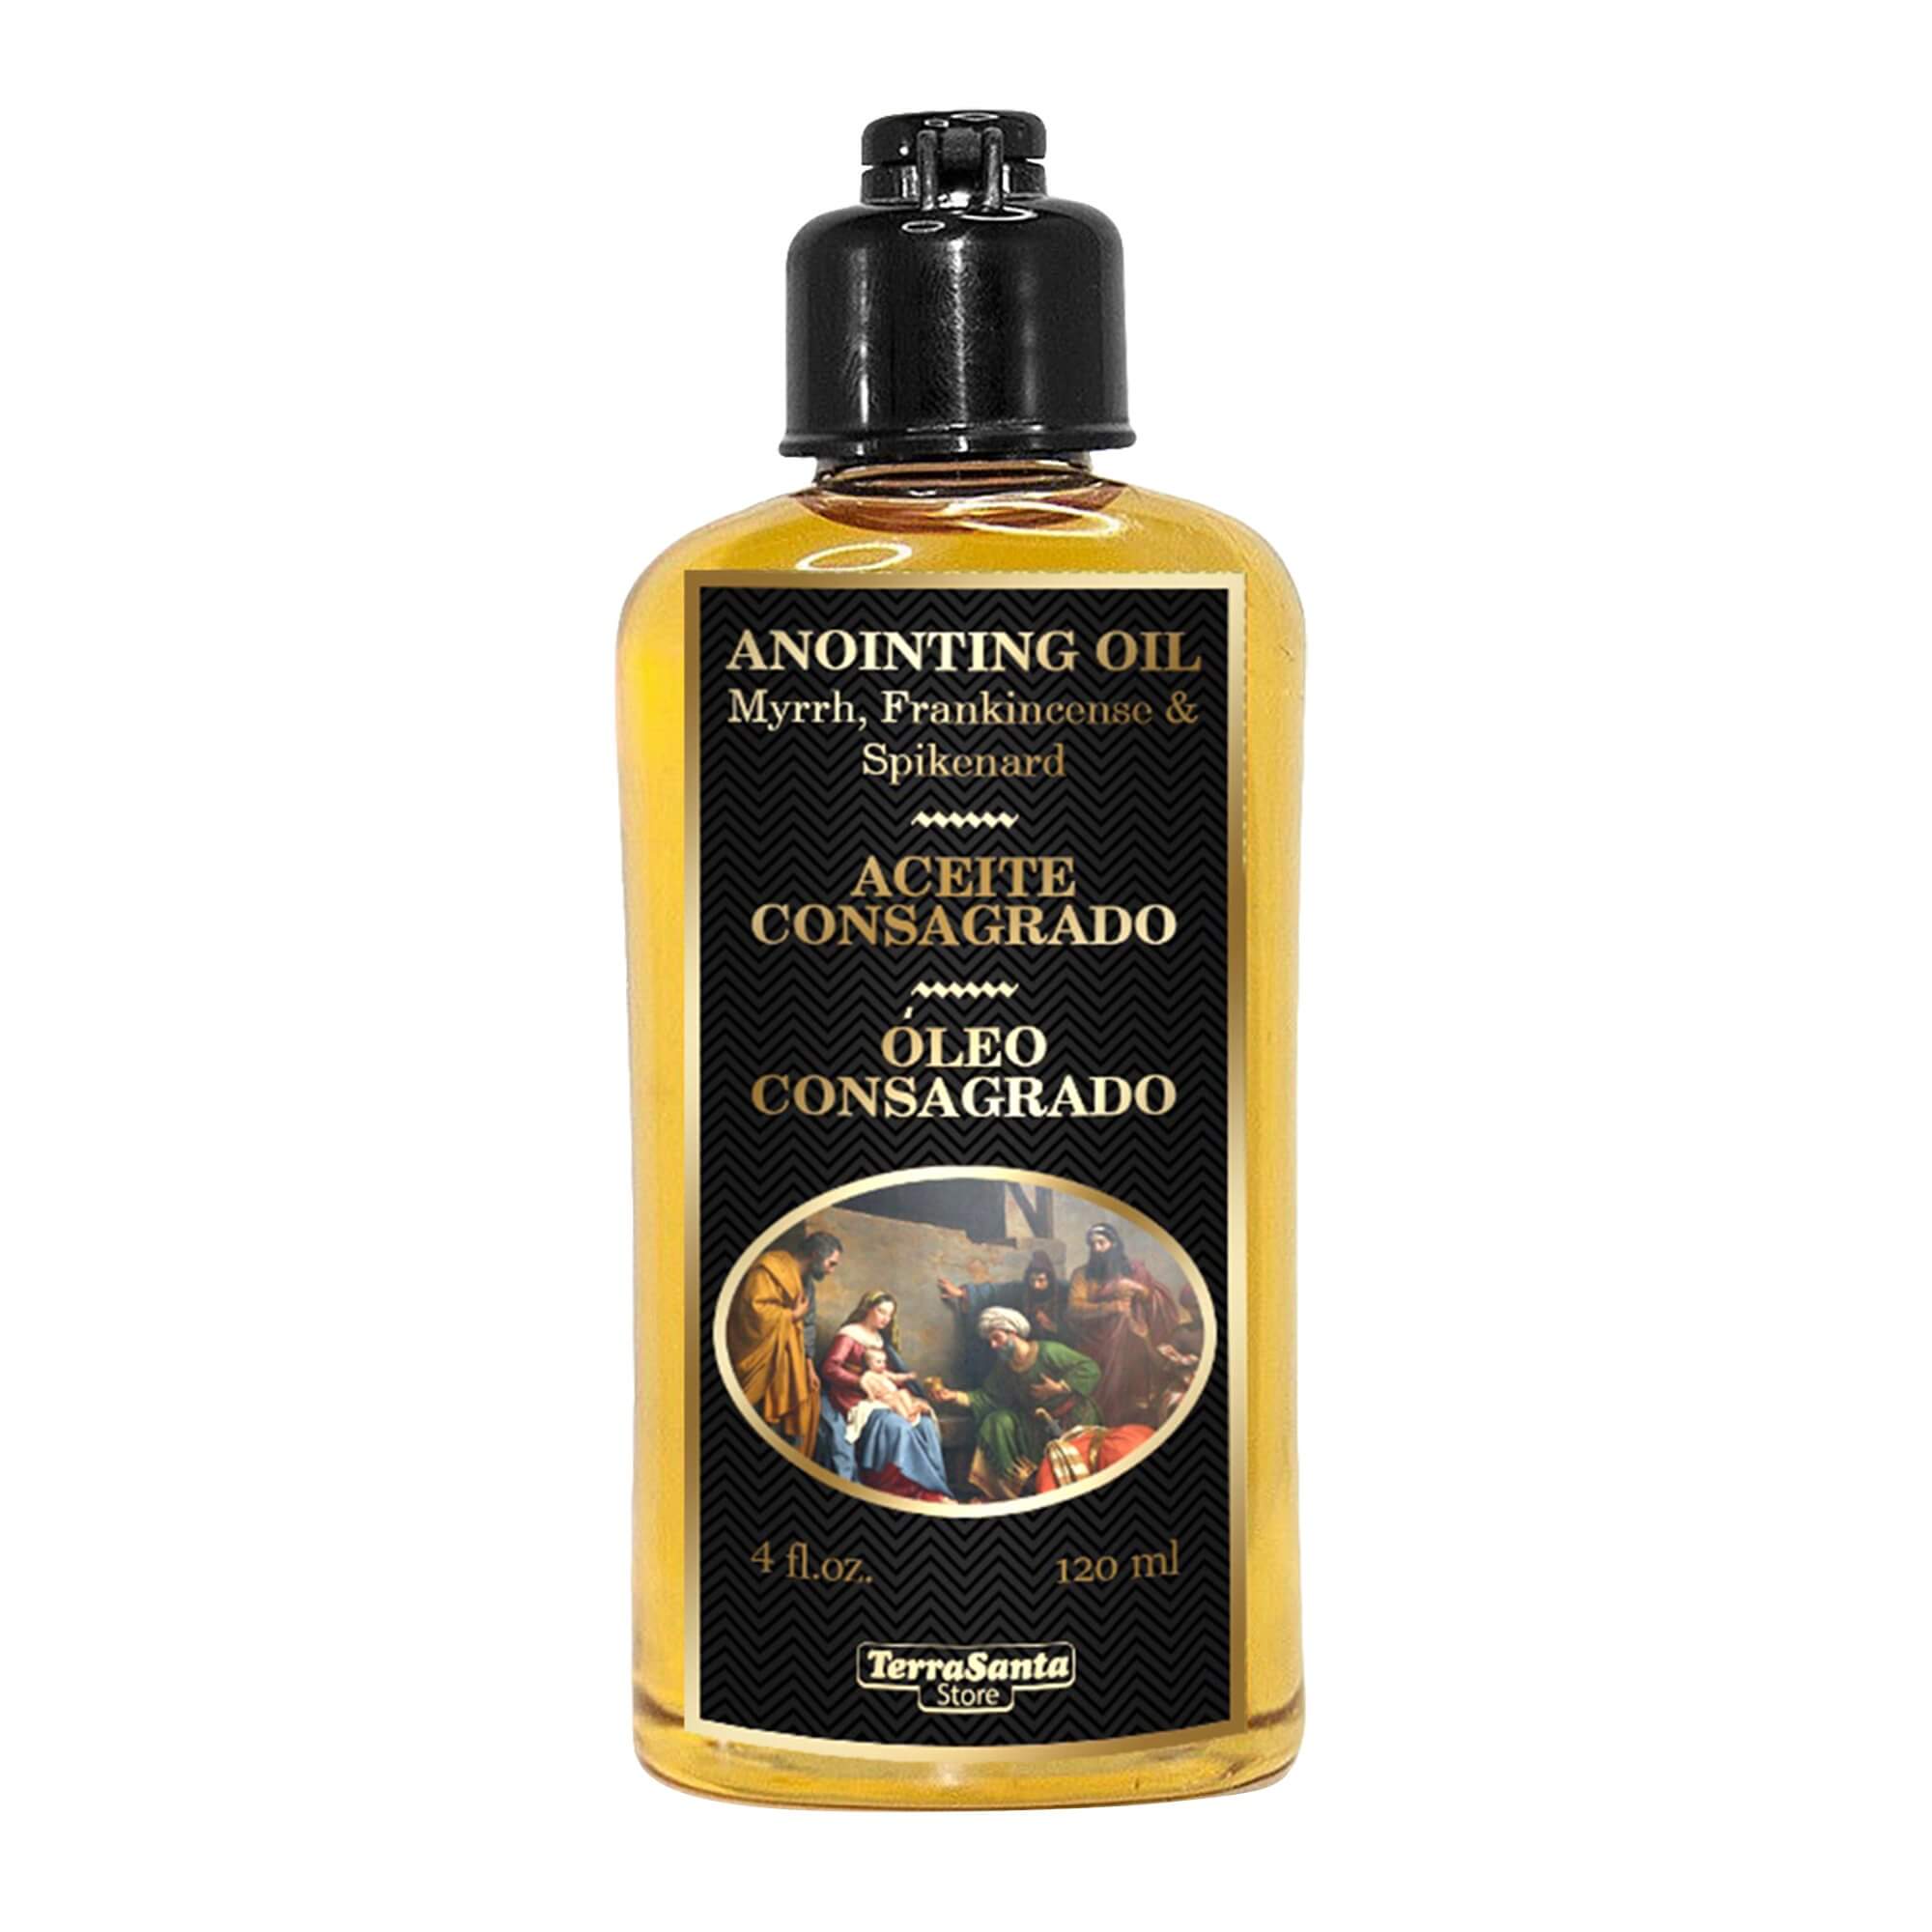 Frankincense, Myrrh and Spikenard Anointing Oil - 250 ml